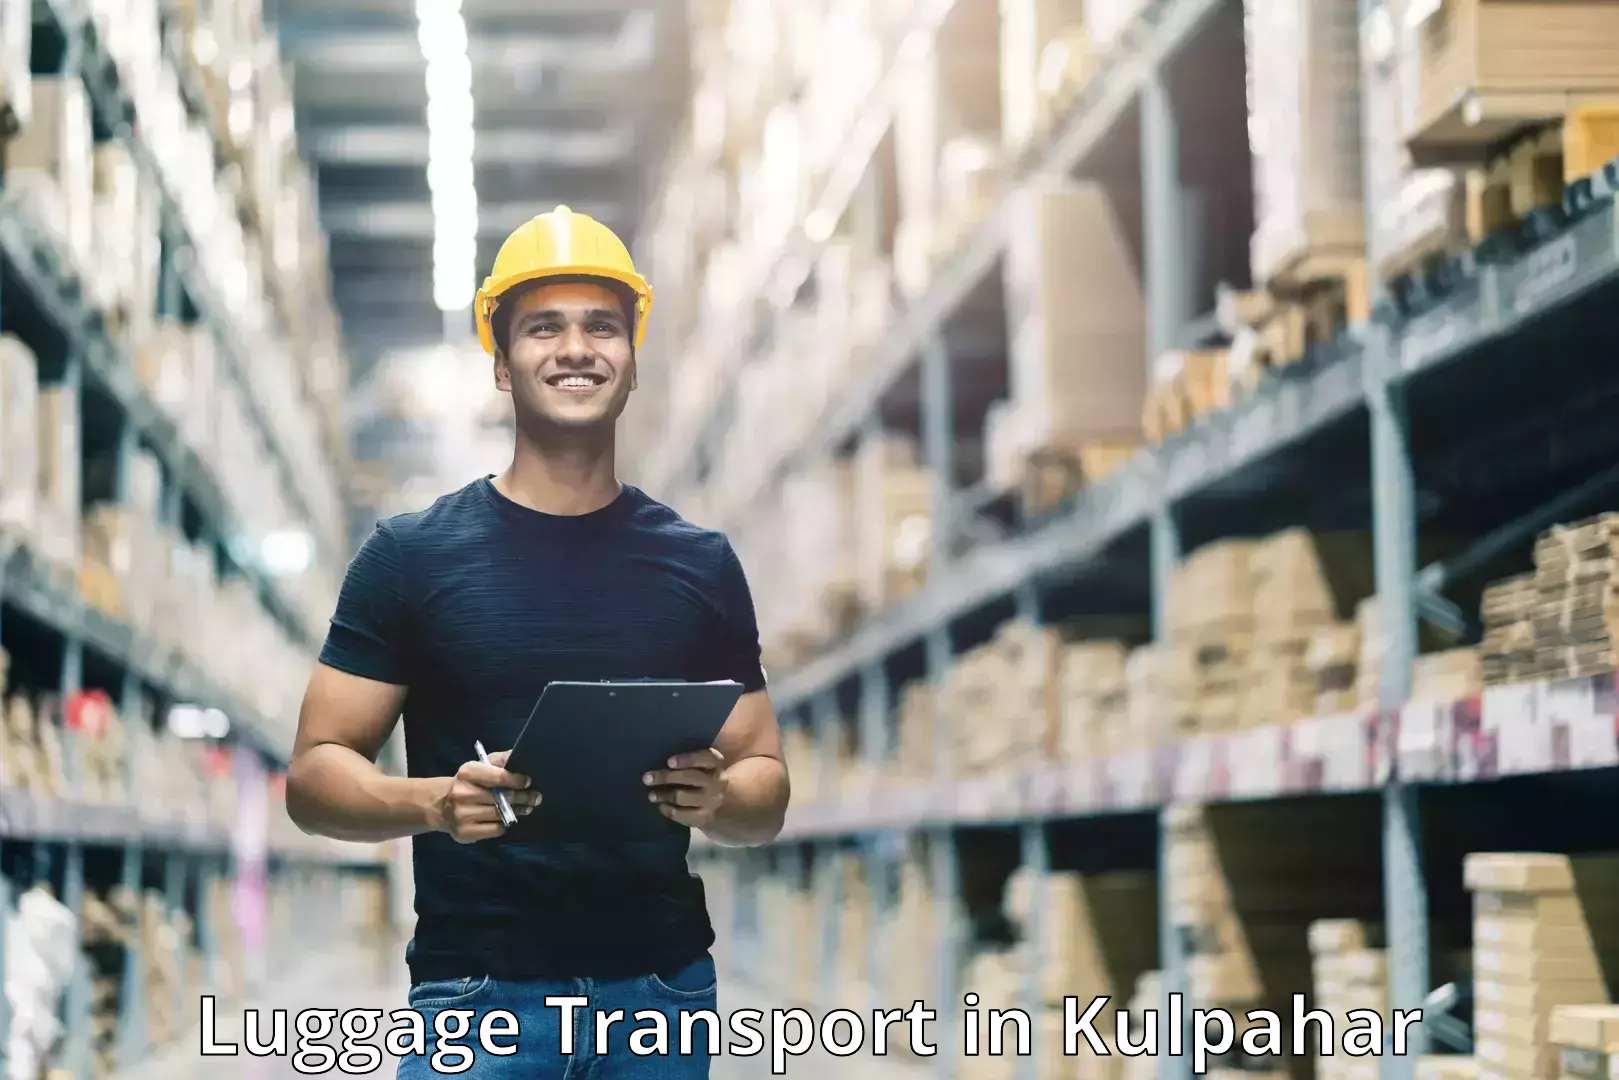 Luggage transfer service in Kulpahar